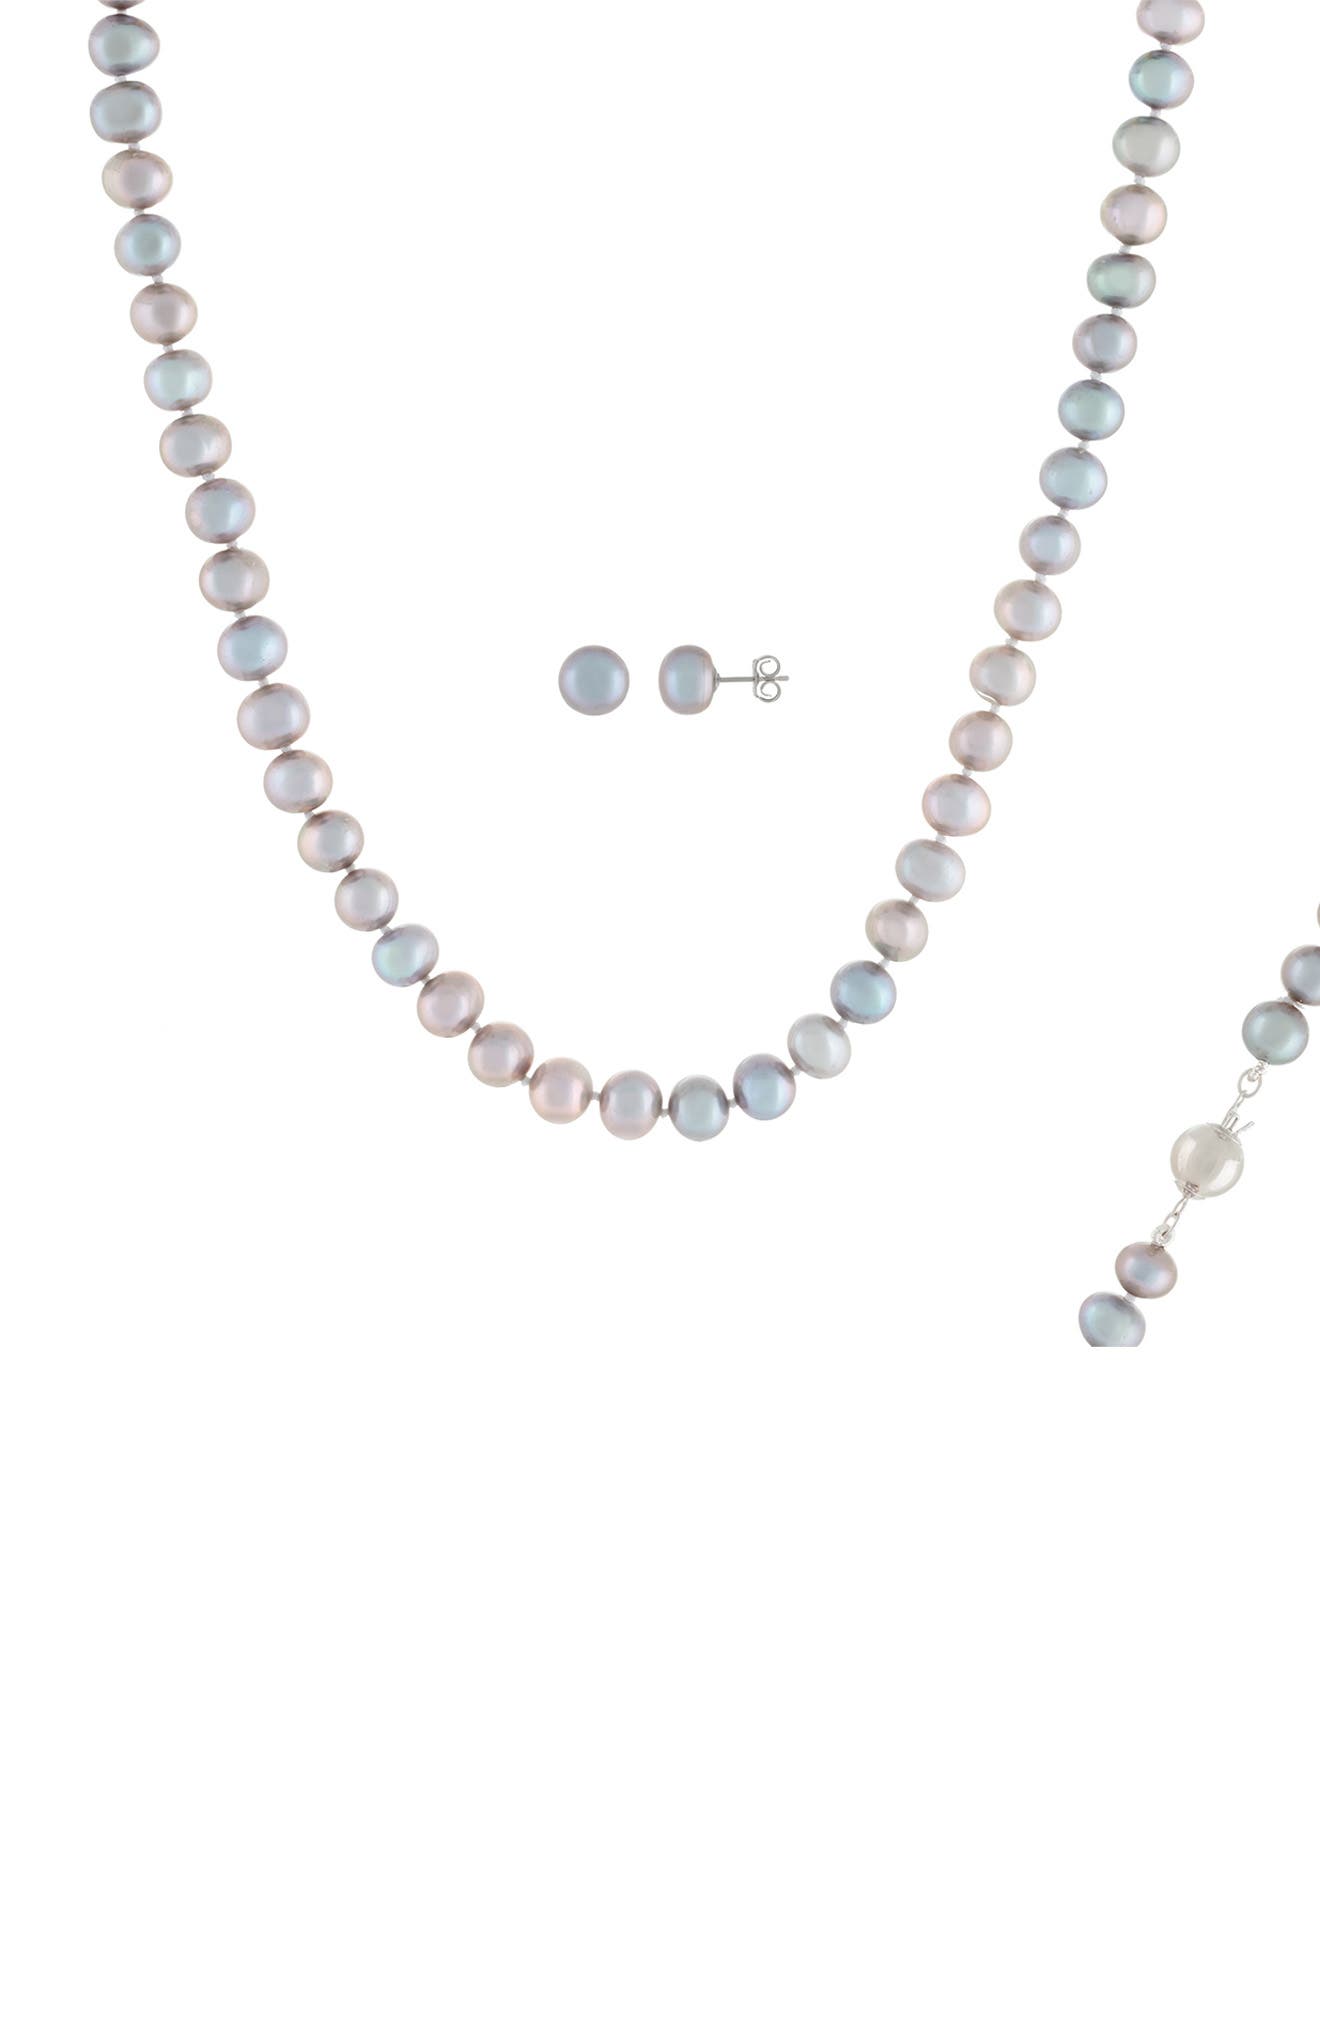 Splendid Pearls Gray 8-8.5mm Freshwater Pearl Necklace & Earrings Set